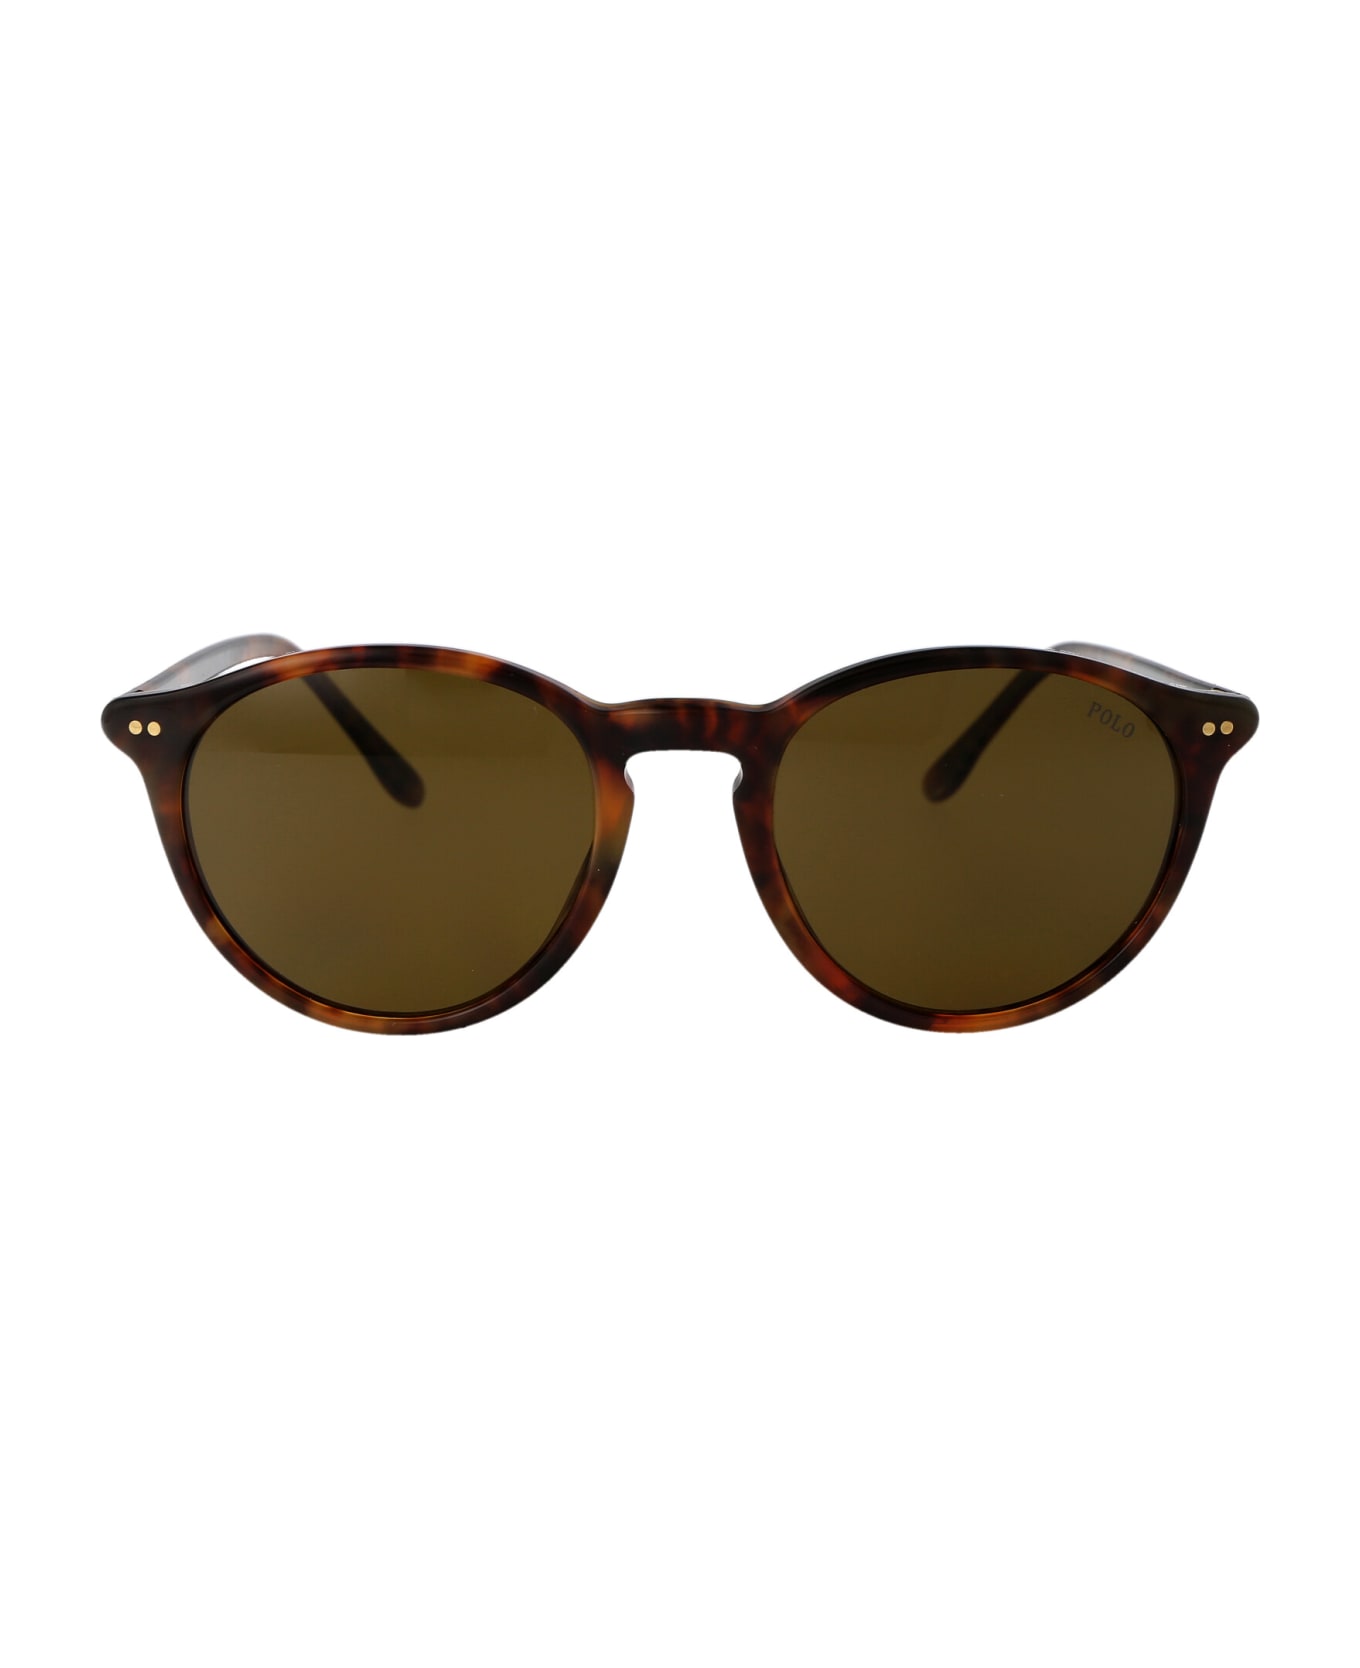 Polo Ralph Lauren 0ph4193 Sunglasses - 501773 Shiny Beige Tortoise サングラス